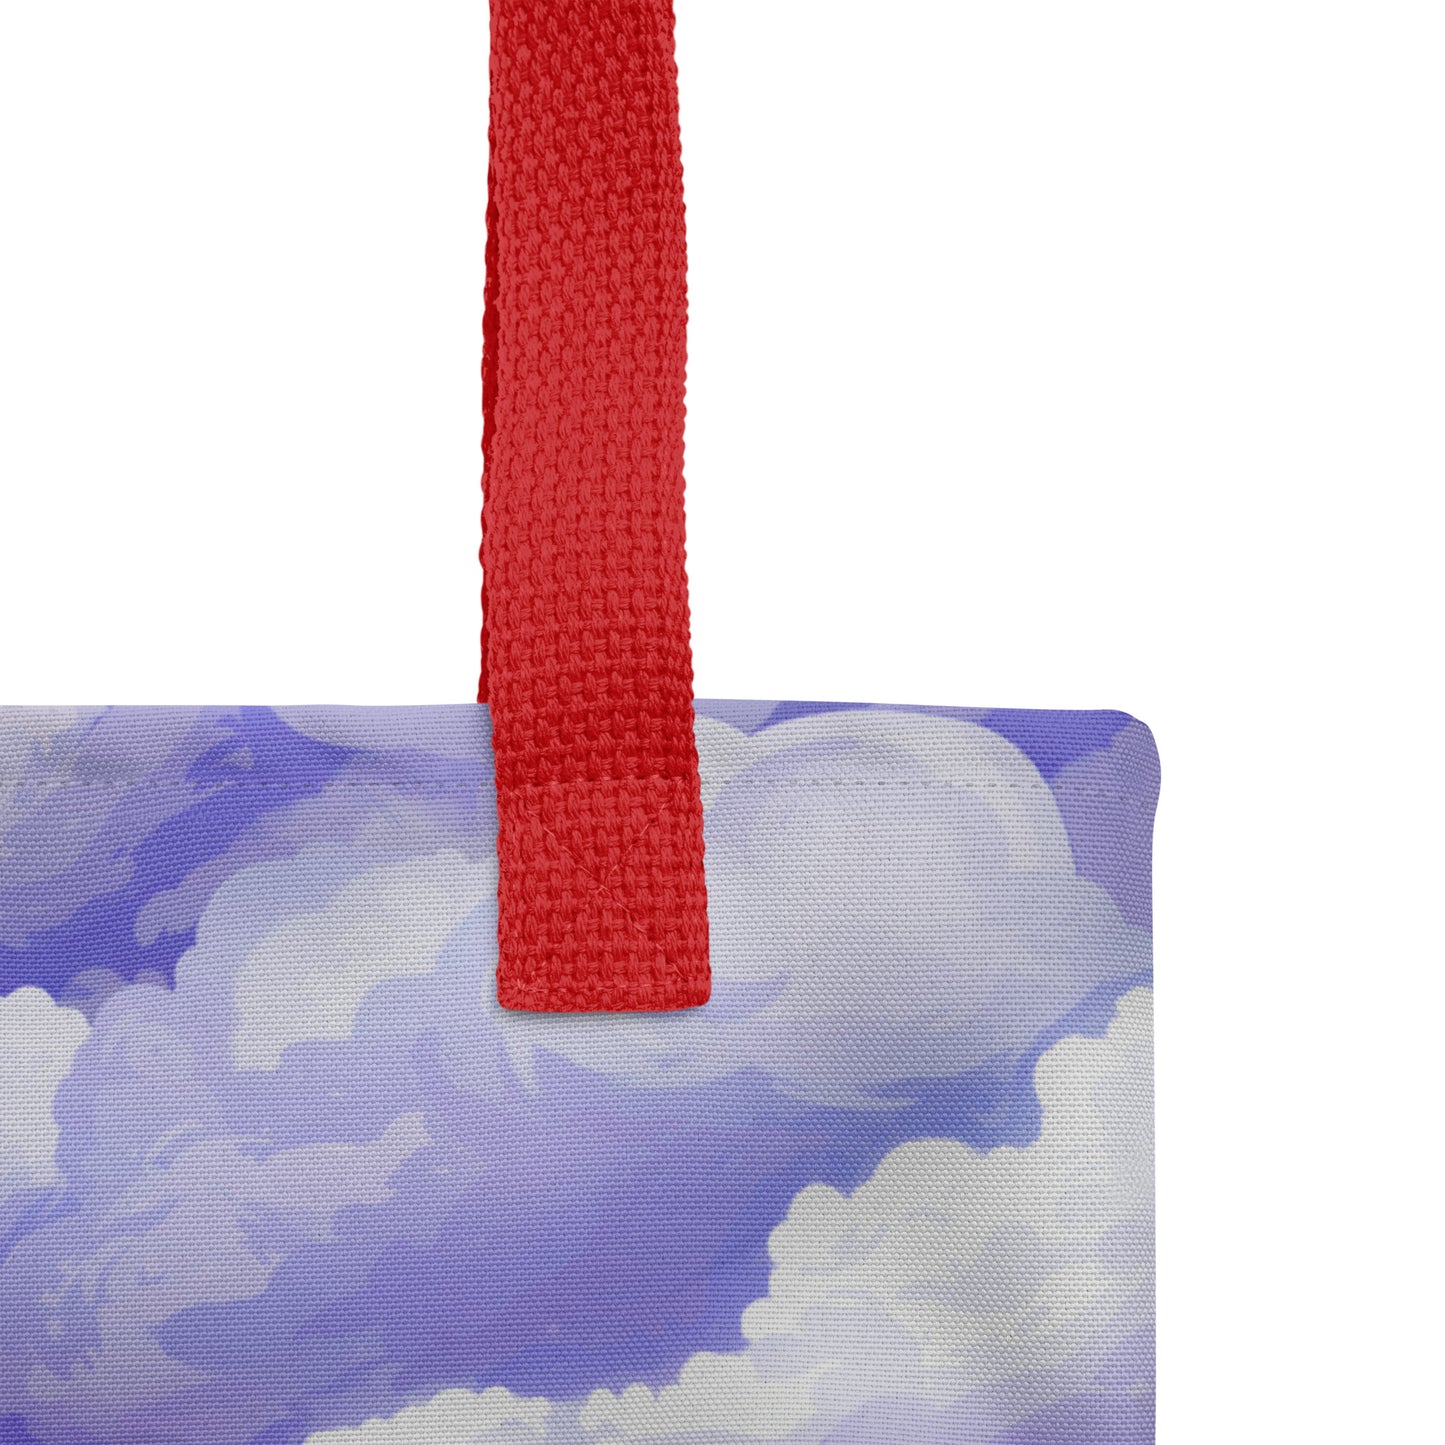 Purple Clouds Tote Bag